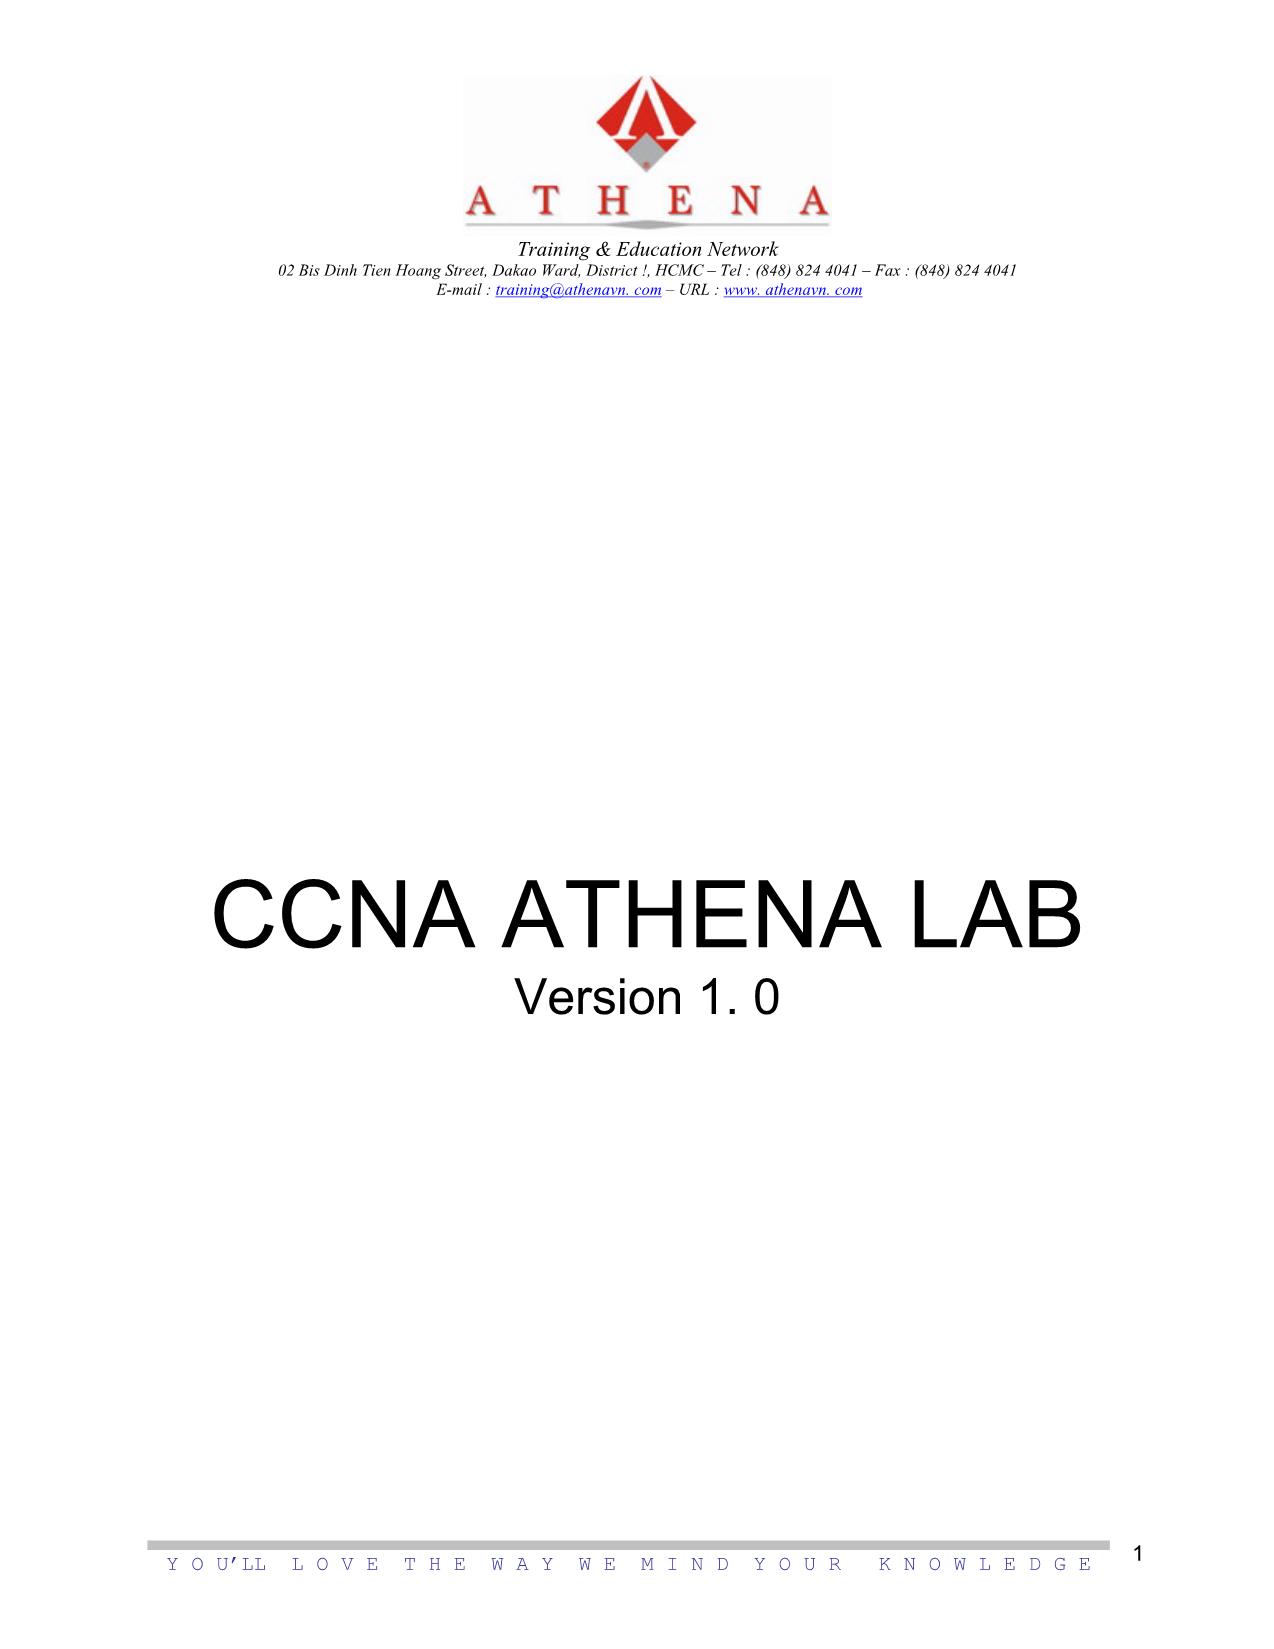 CCNA ATHENA LAB trang 1